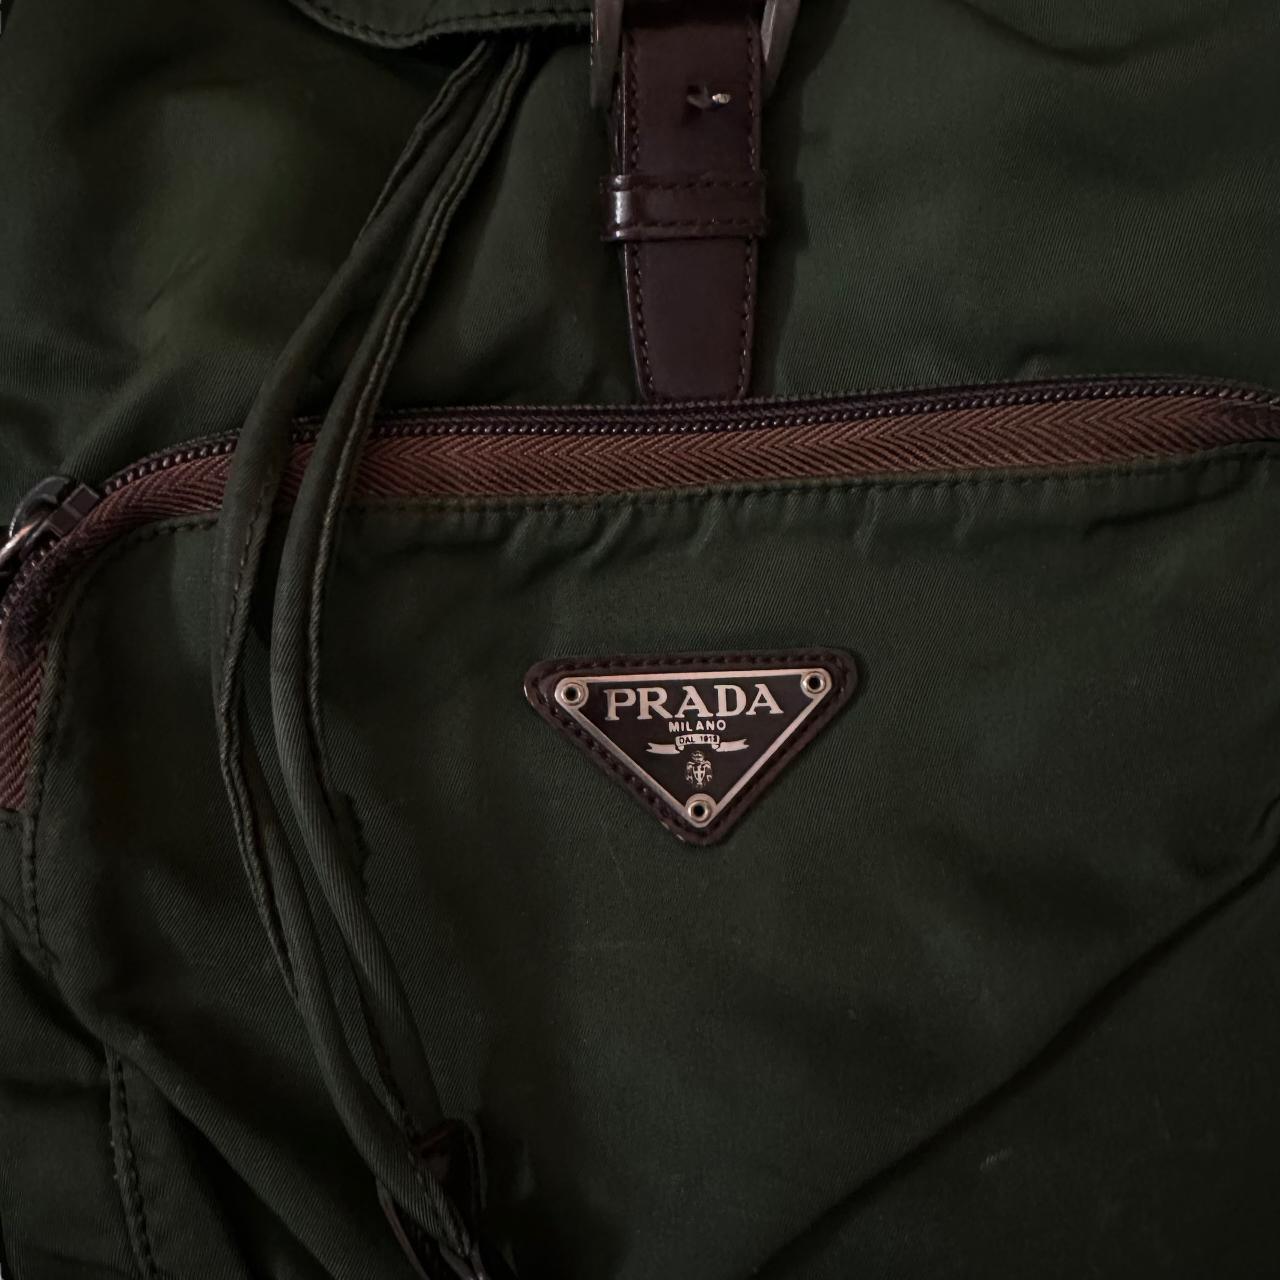 Prada Green Backpack - Known Source